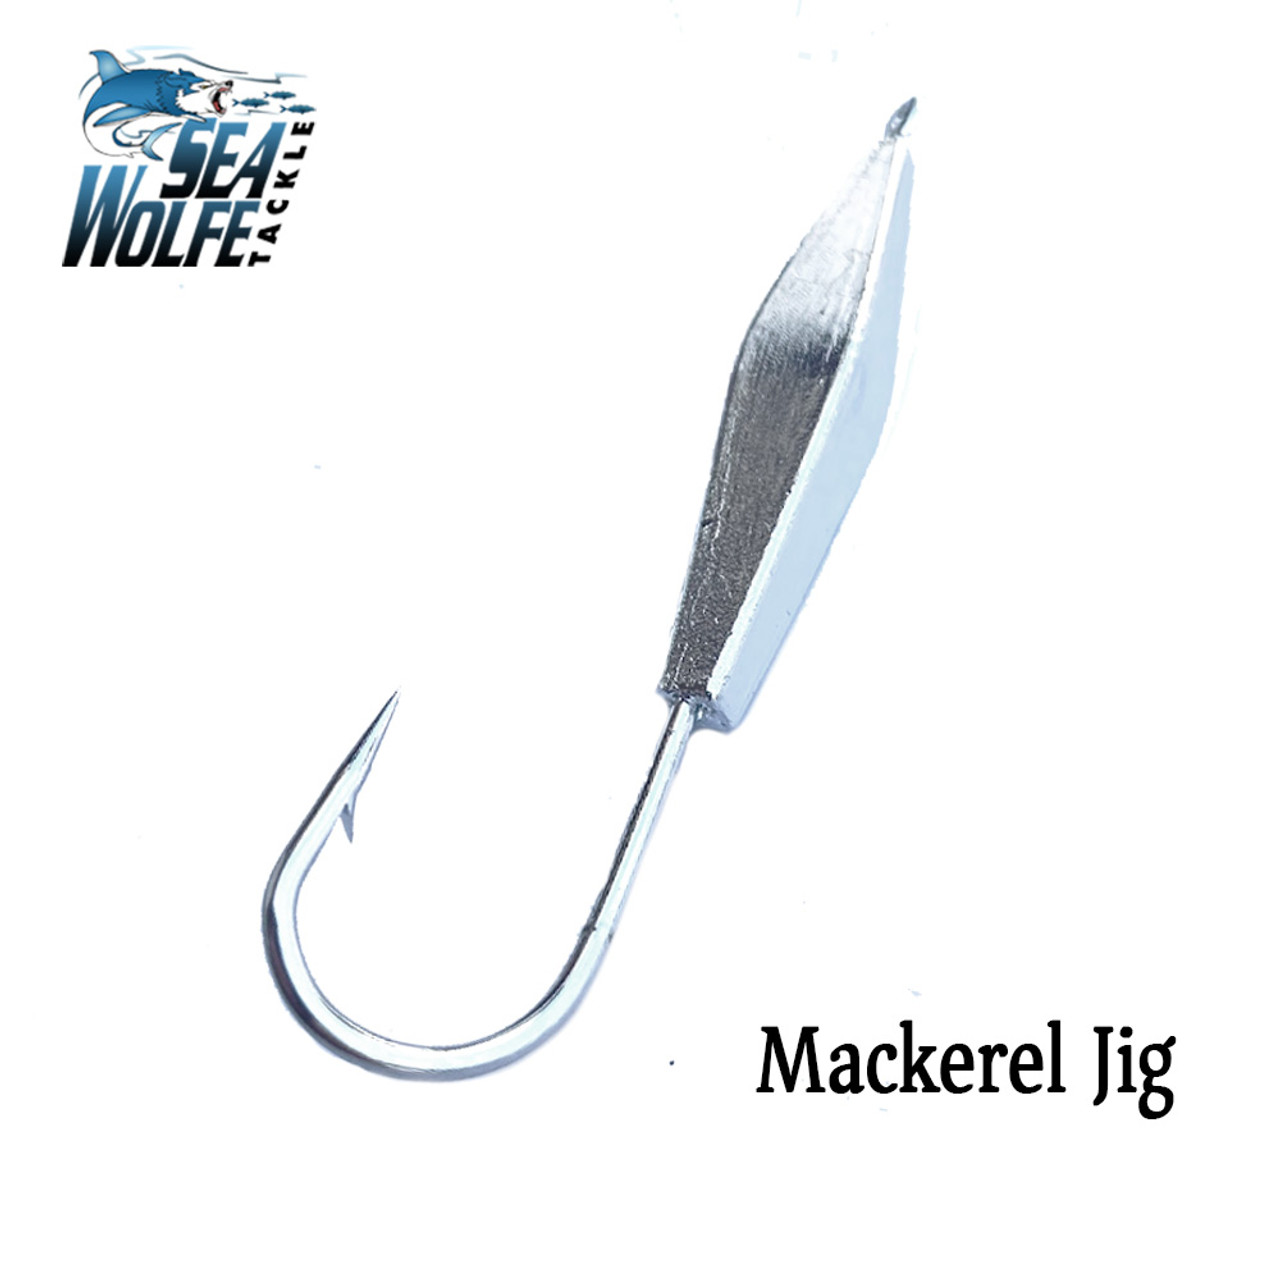 3/5 x FFT 28g 40g 60g Chrome Silver Spinner lure Mackerel Bass Pier Boat  fishing